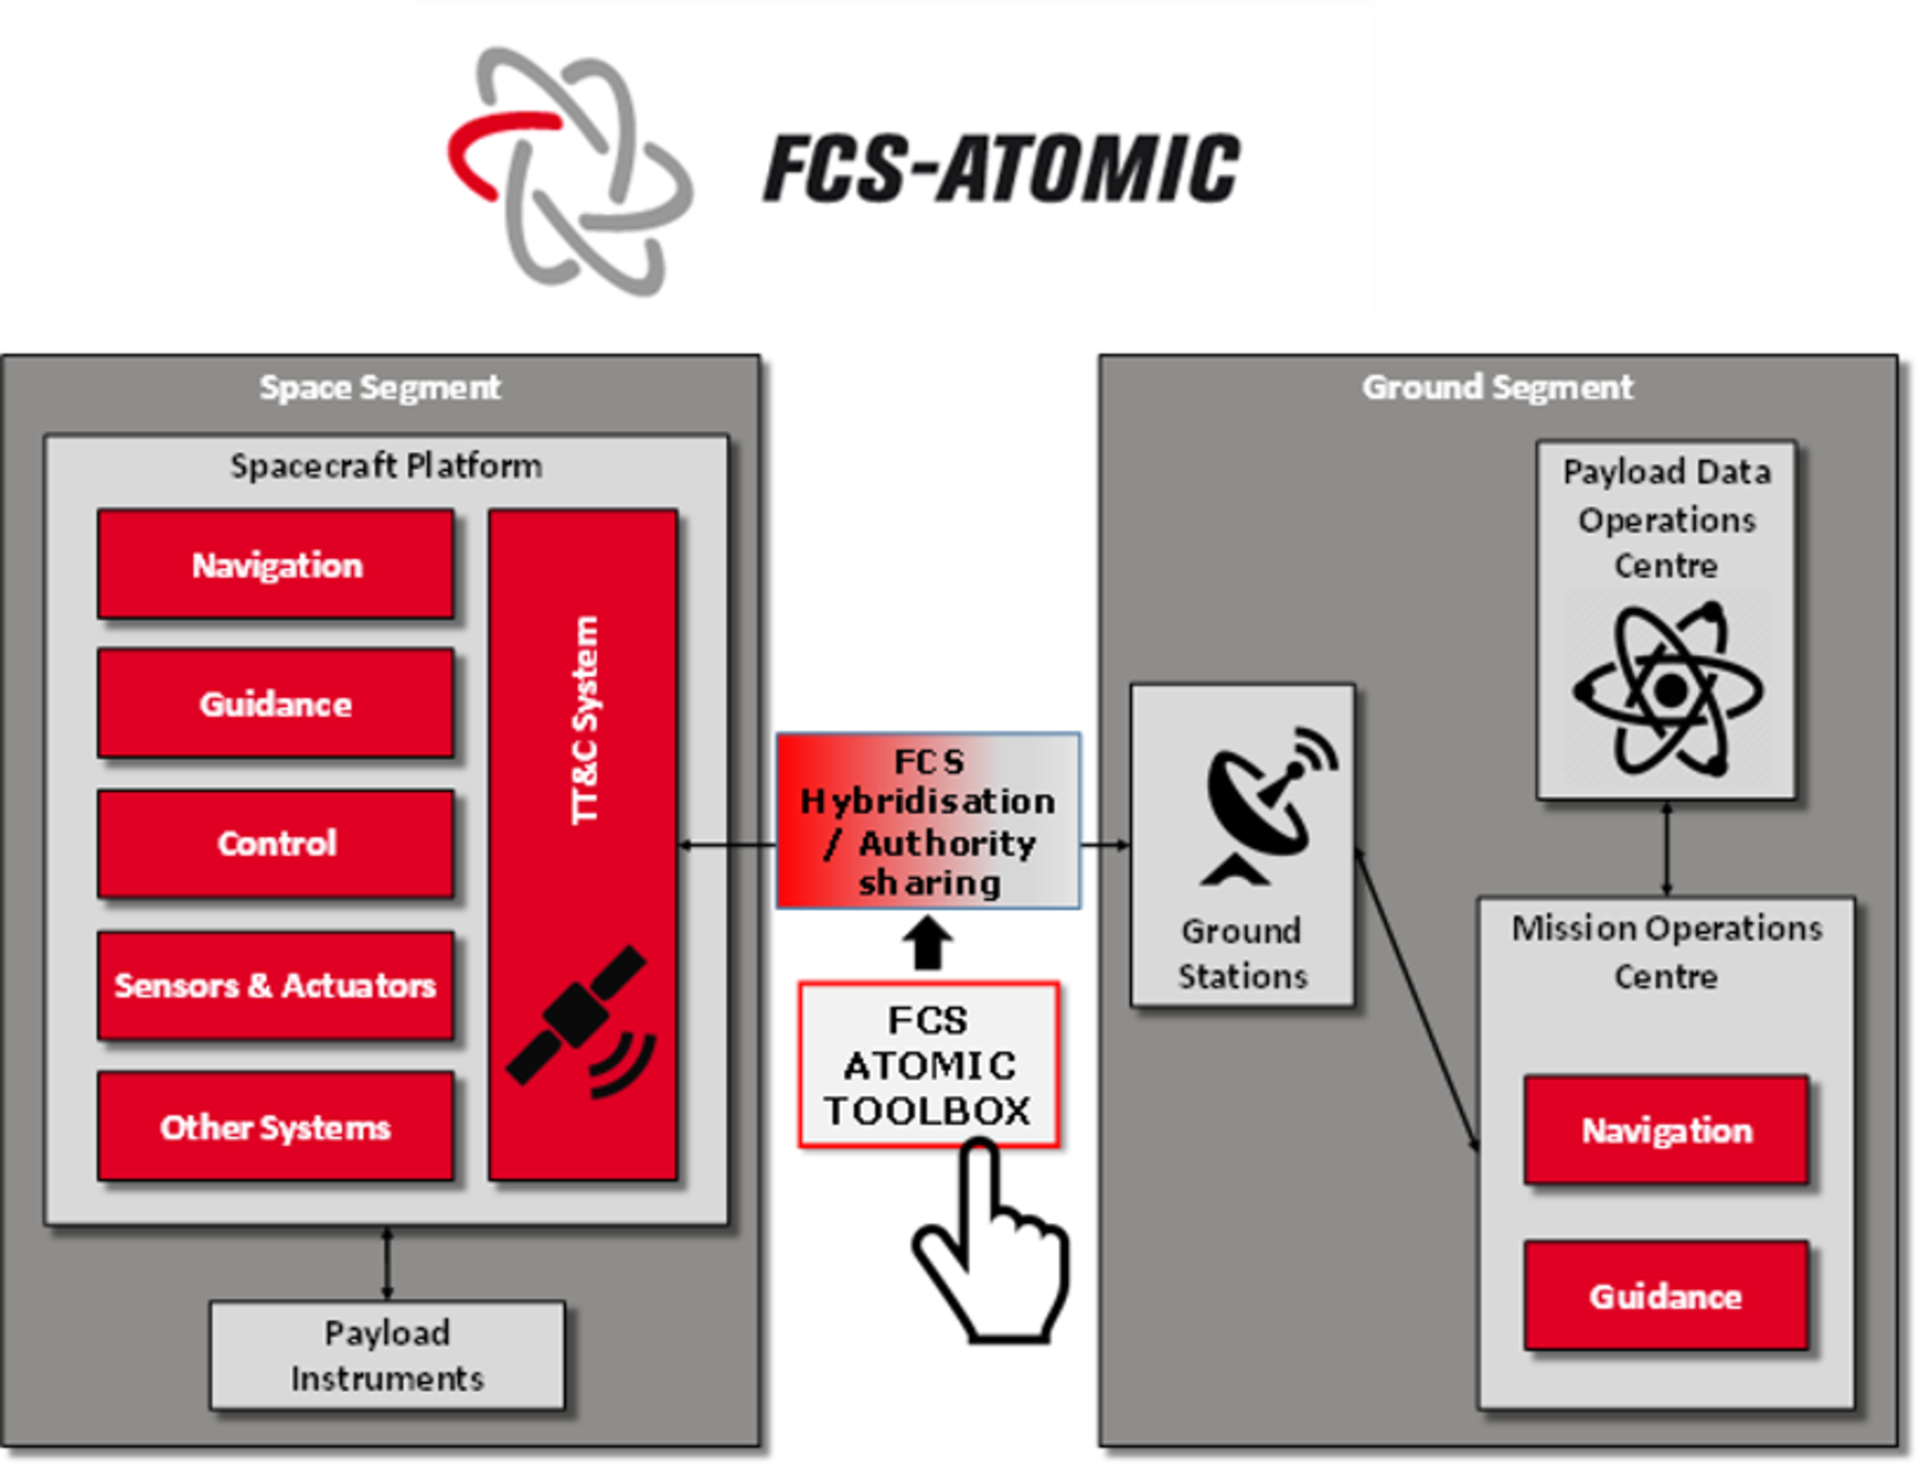 FCS-ATOMIC toolbox